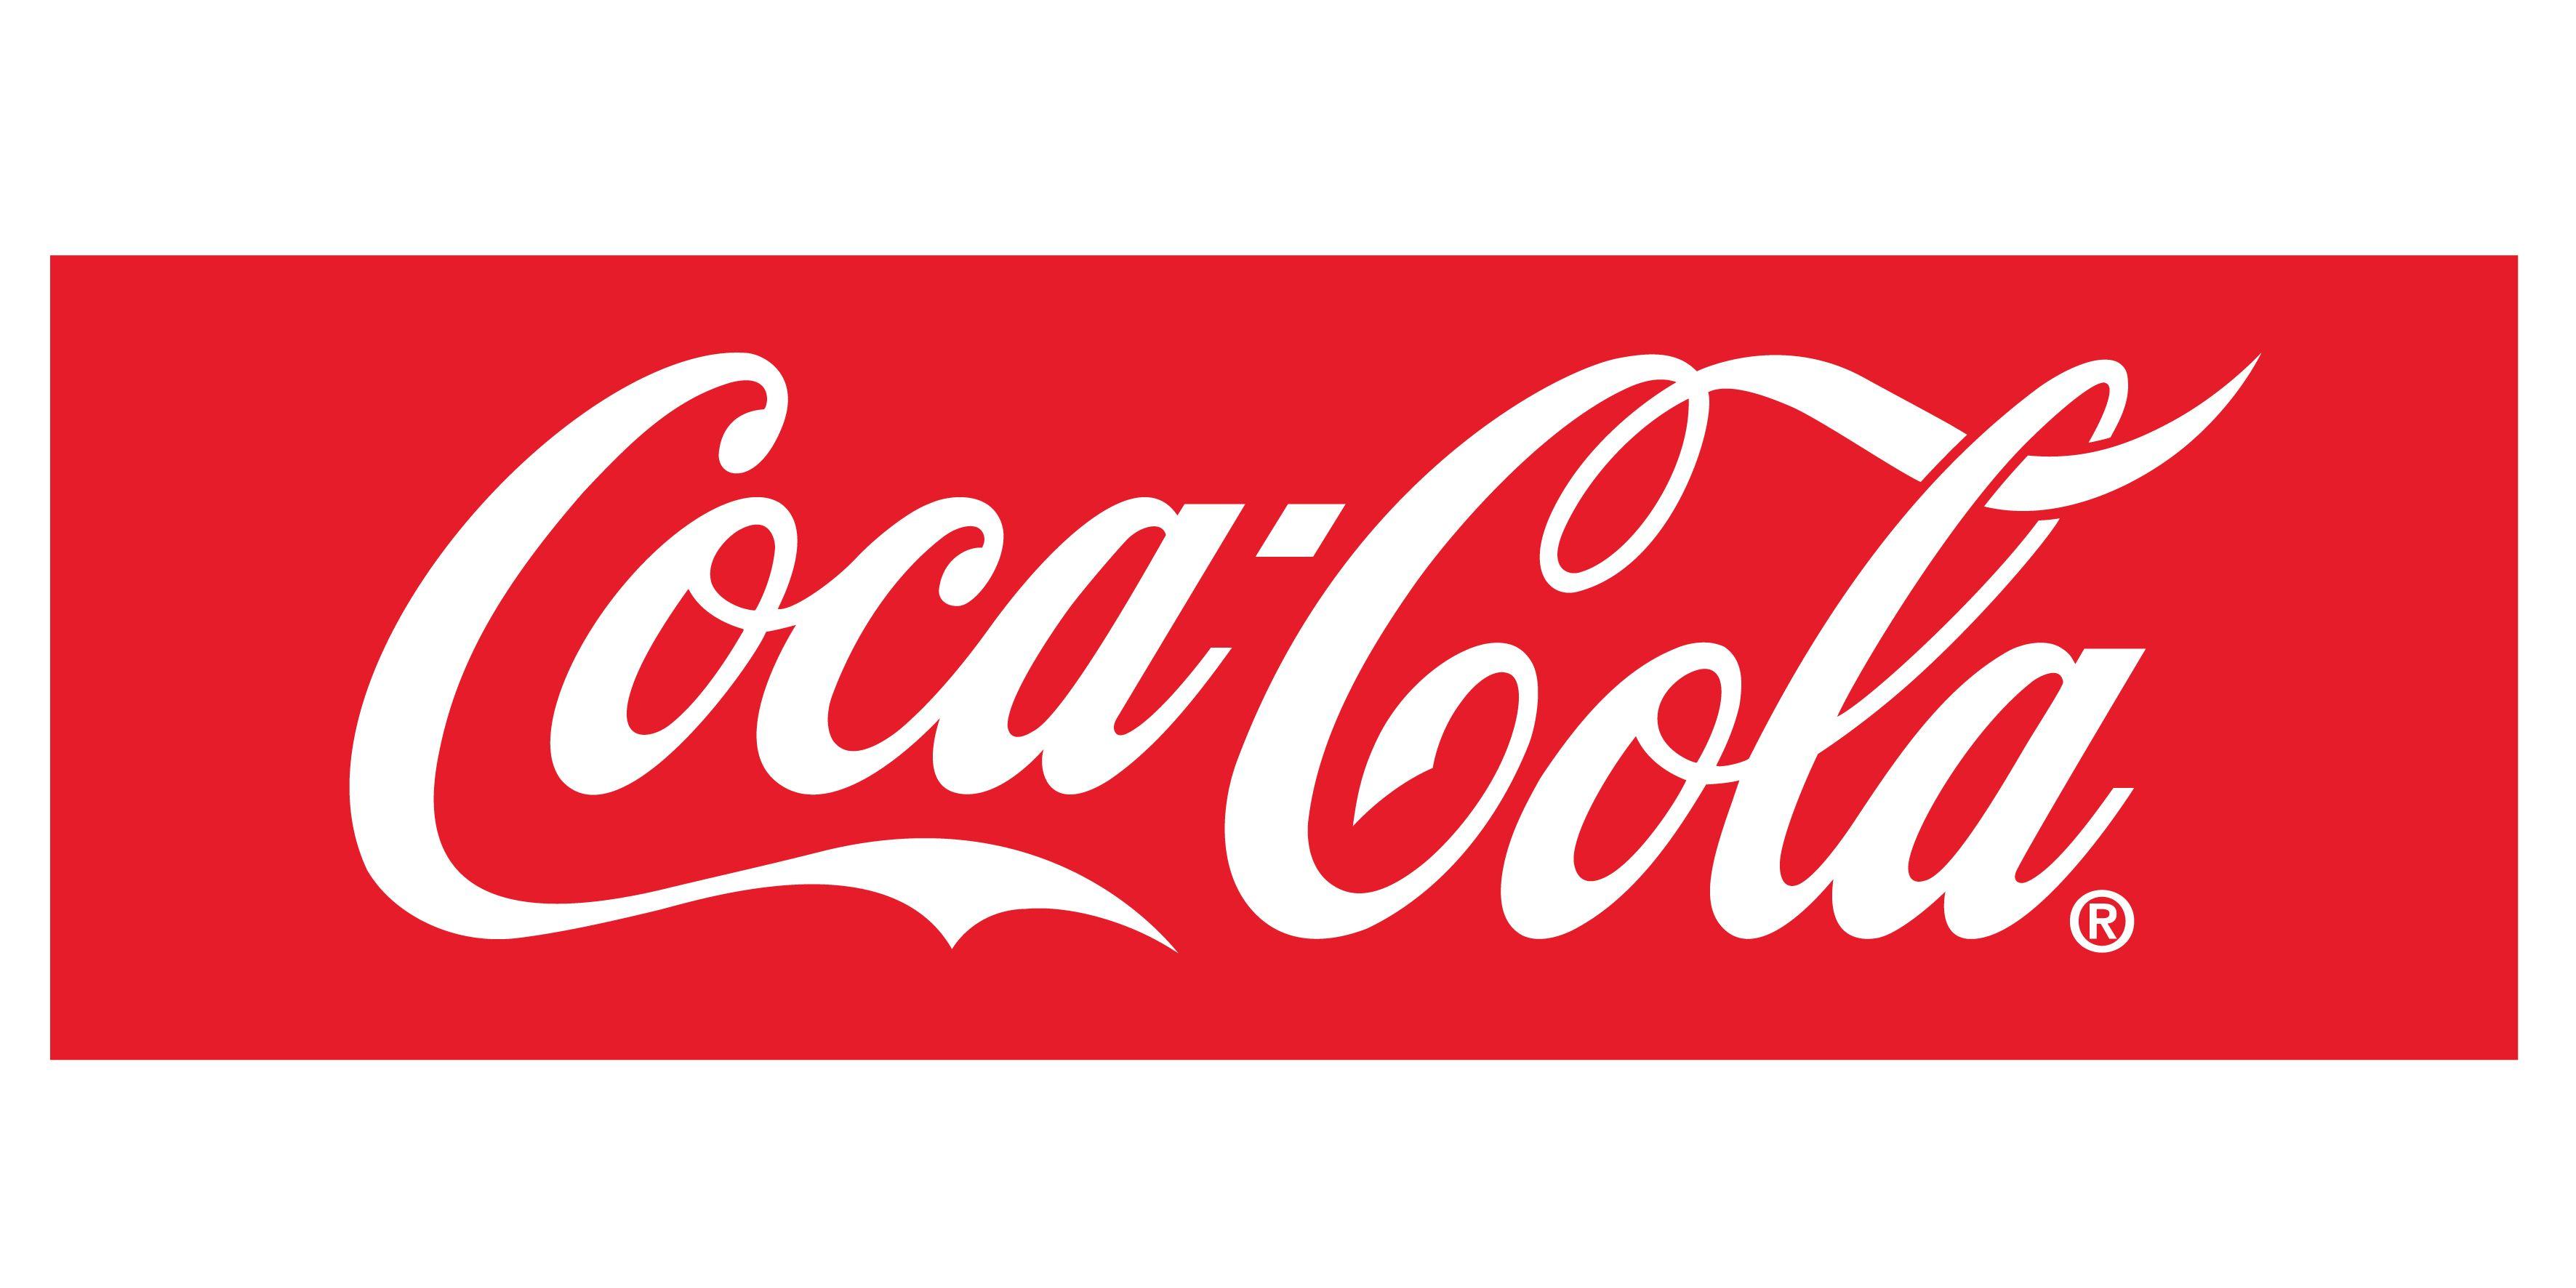 Cocaola Logo - 946692 Coca Cola Logo Chamber Of Commerce